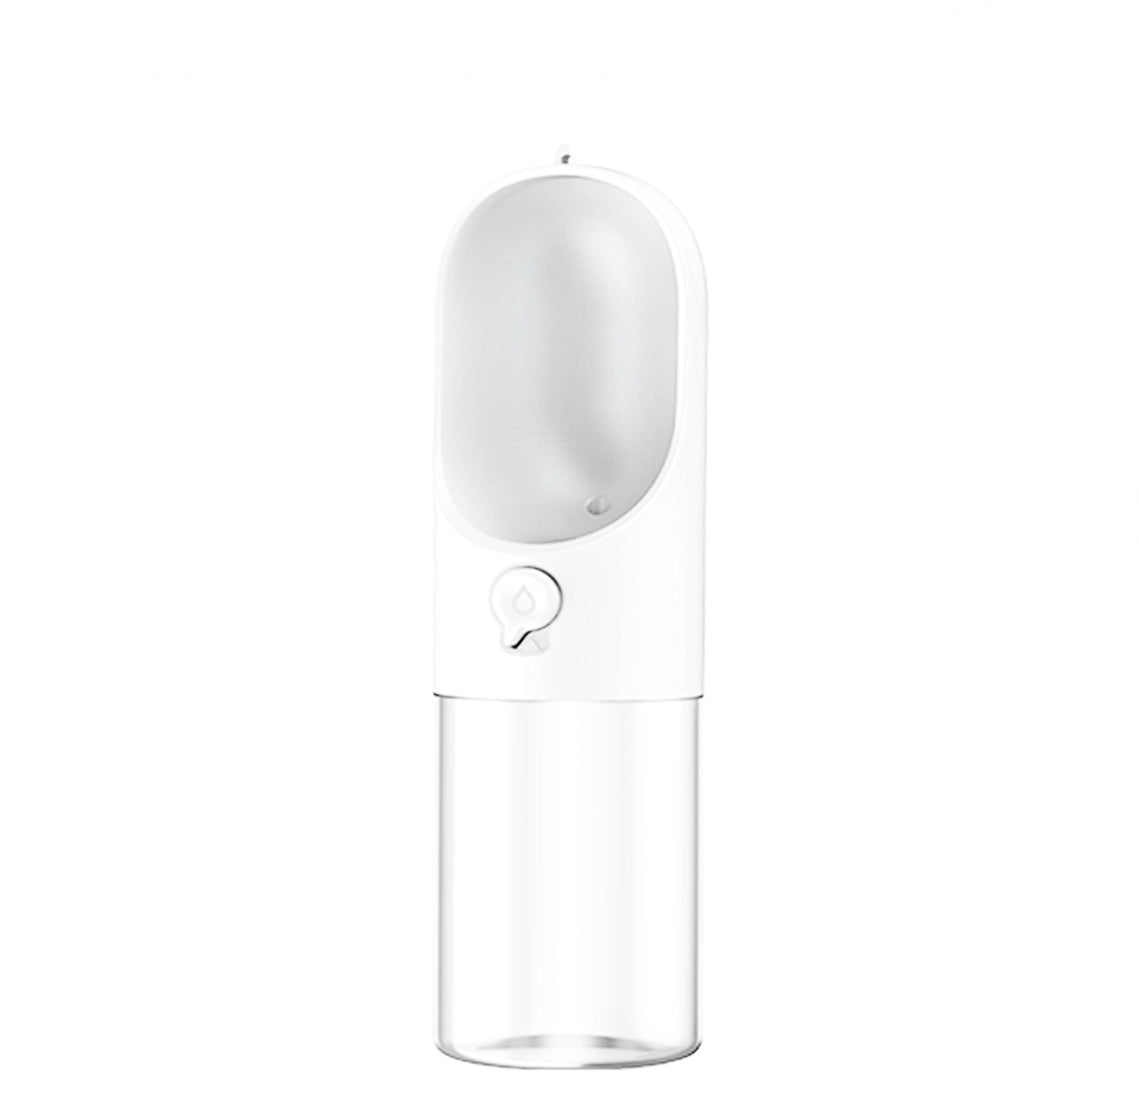 Eversweet Travel Water Bottle - WHITE 300 ML